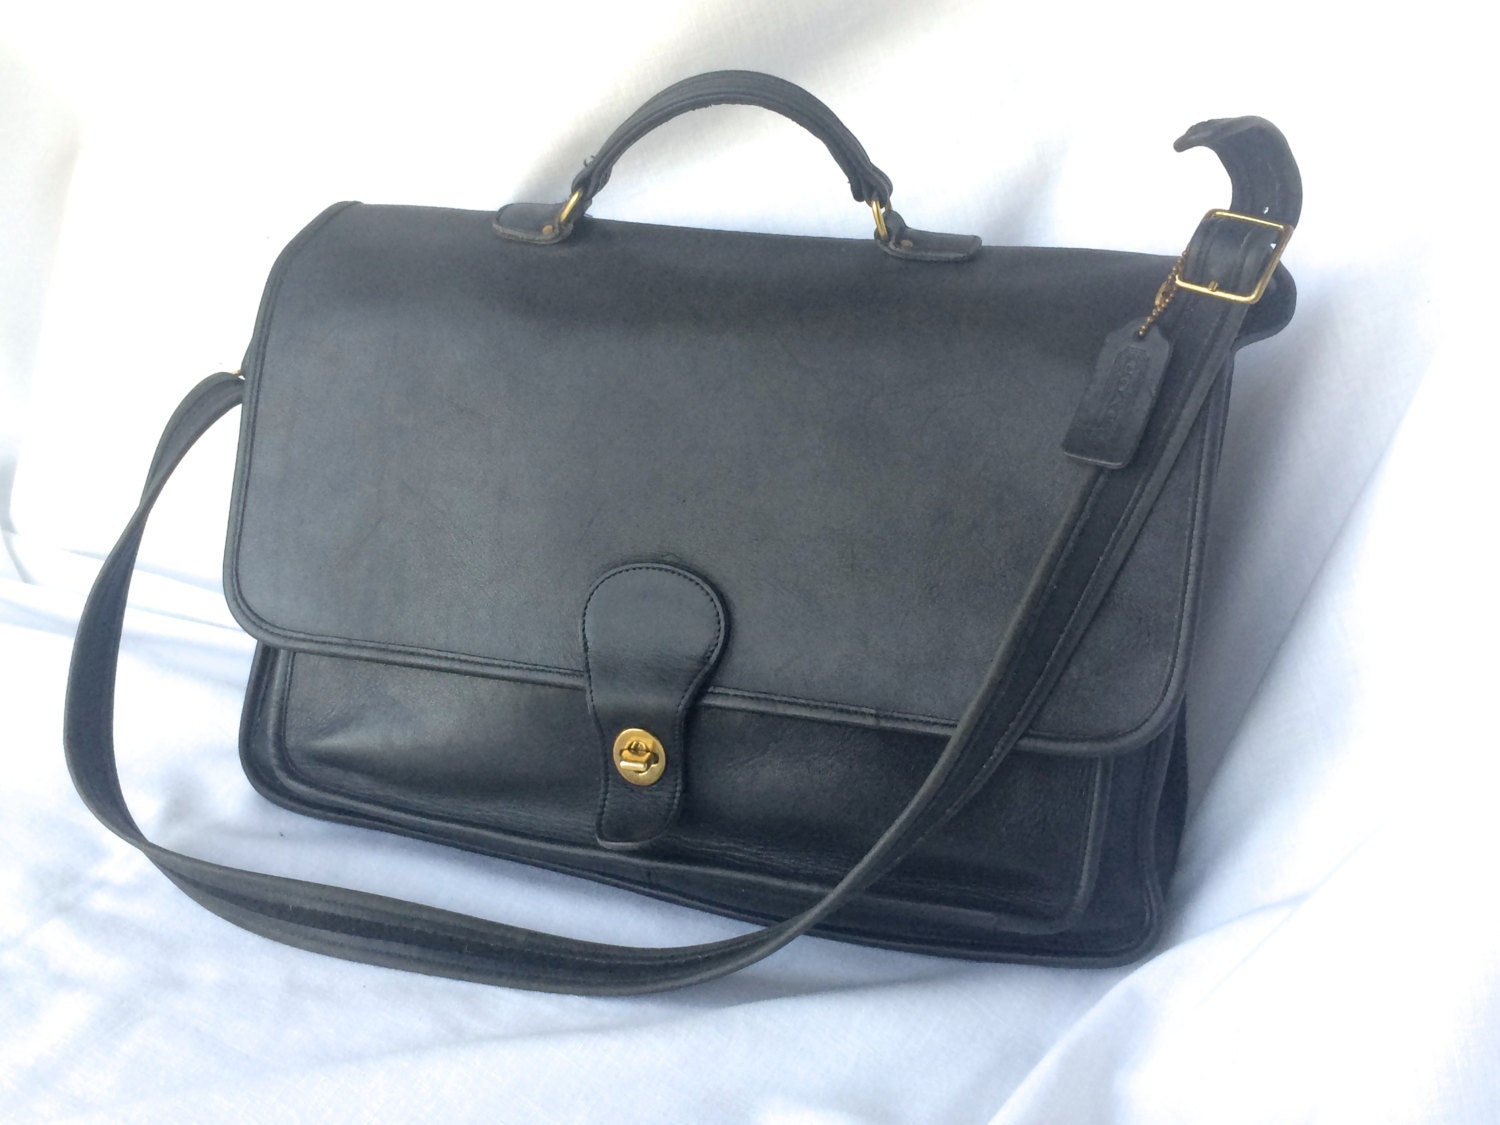 Vintage COACH Briefcase Laptop Bag in Black Leather